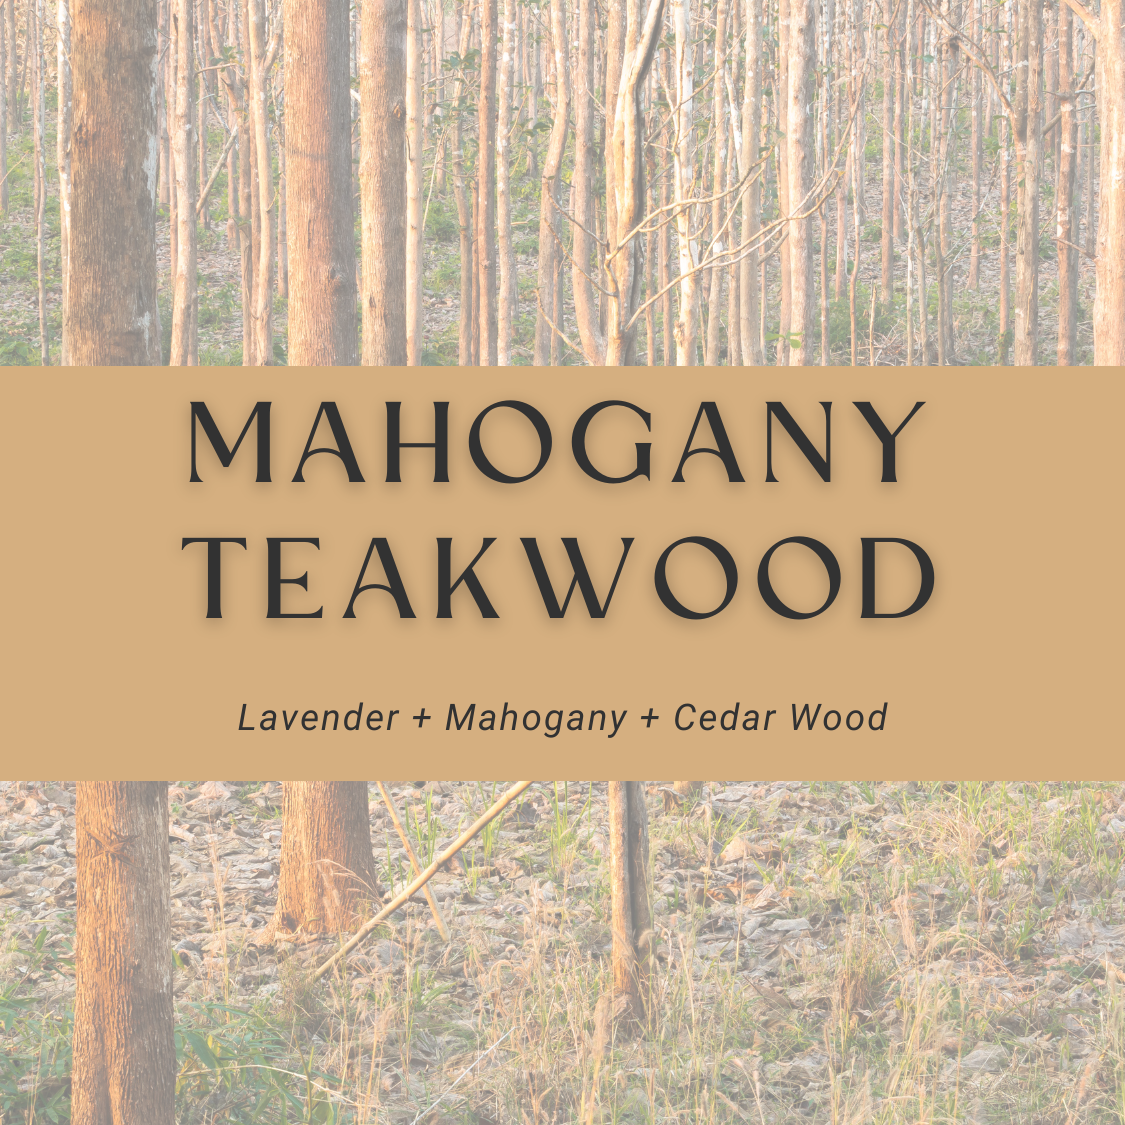 Mahogany Teakwood Car Diffuser Oil + Refill Set